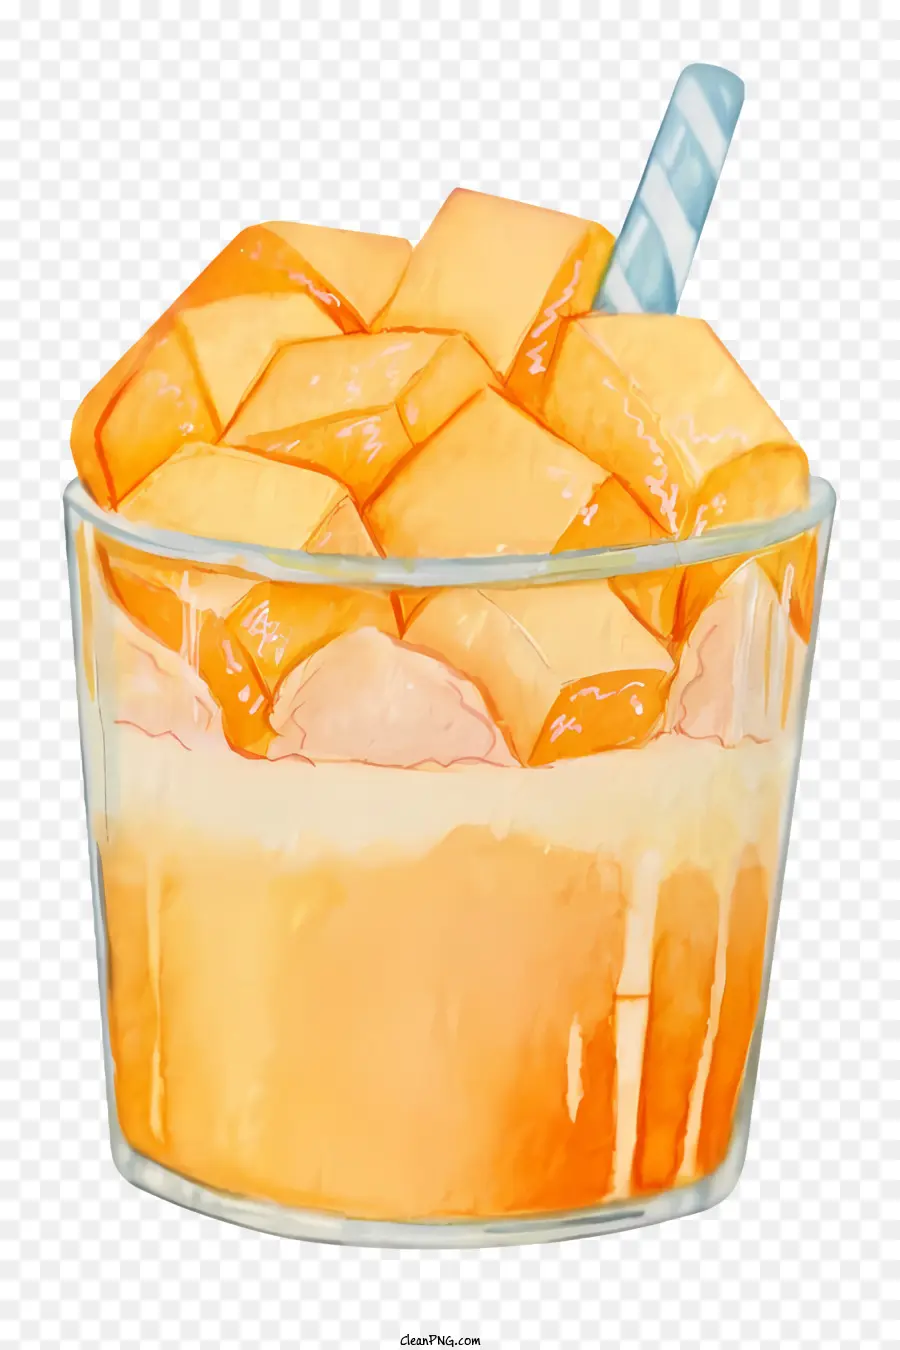 Aquarell Illustration Glas aus Orangensaftstroh Orangenscheiben halb voll - Aquarellillustration von halben vollen Orangensaft